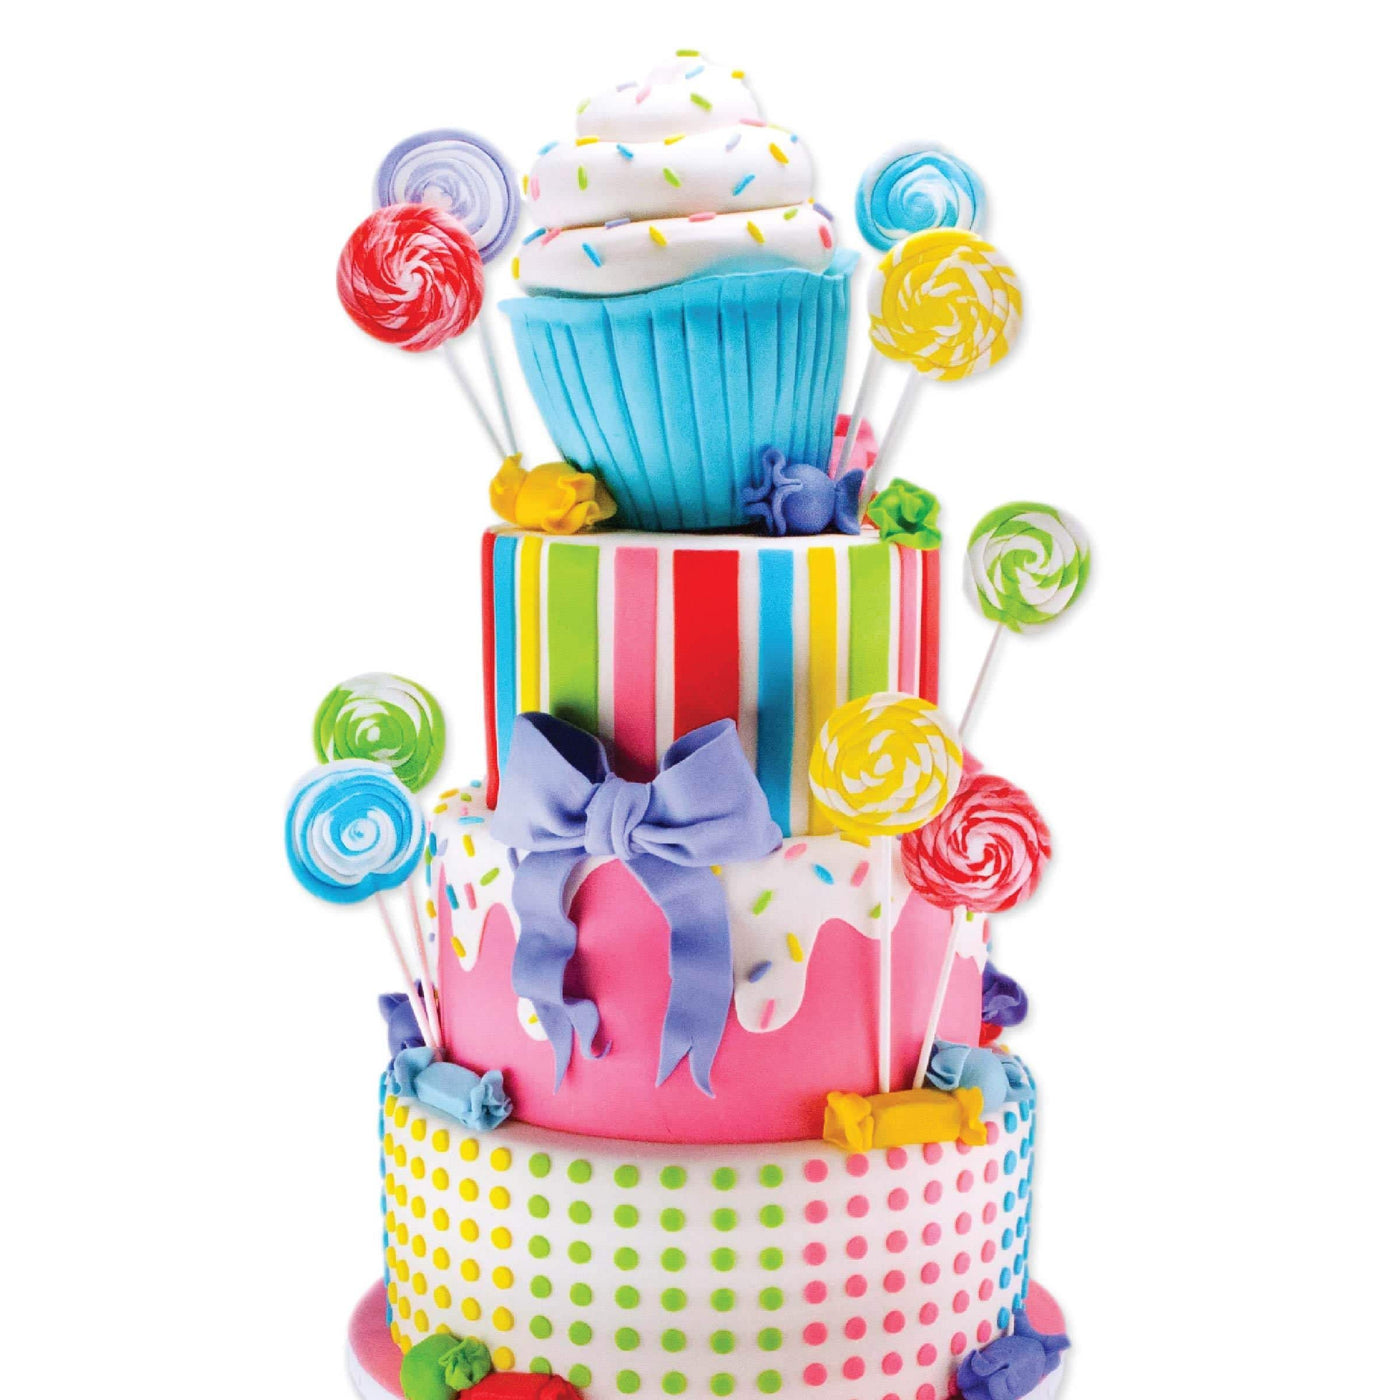 Candy Land Cake - Sweet E's Bake Shop - The Cake Shop